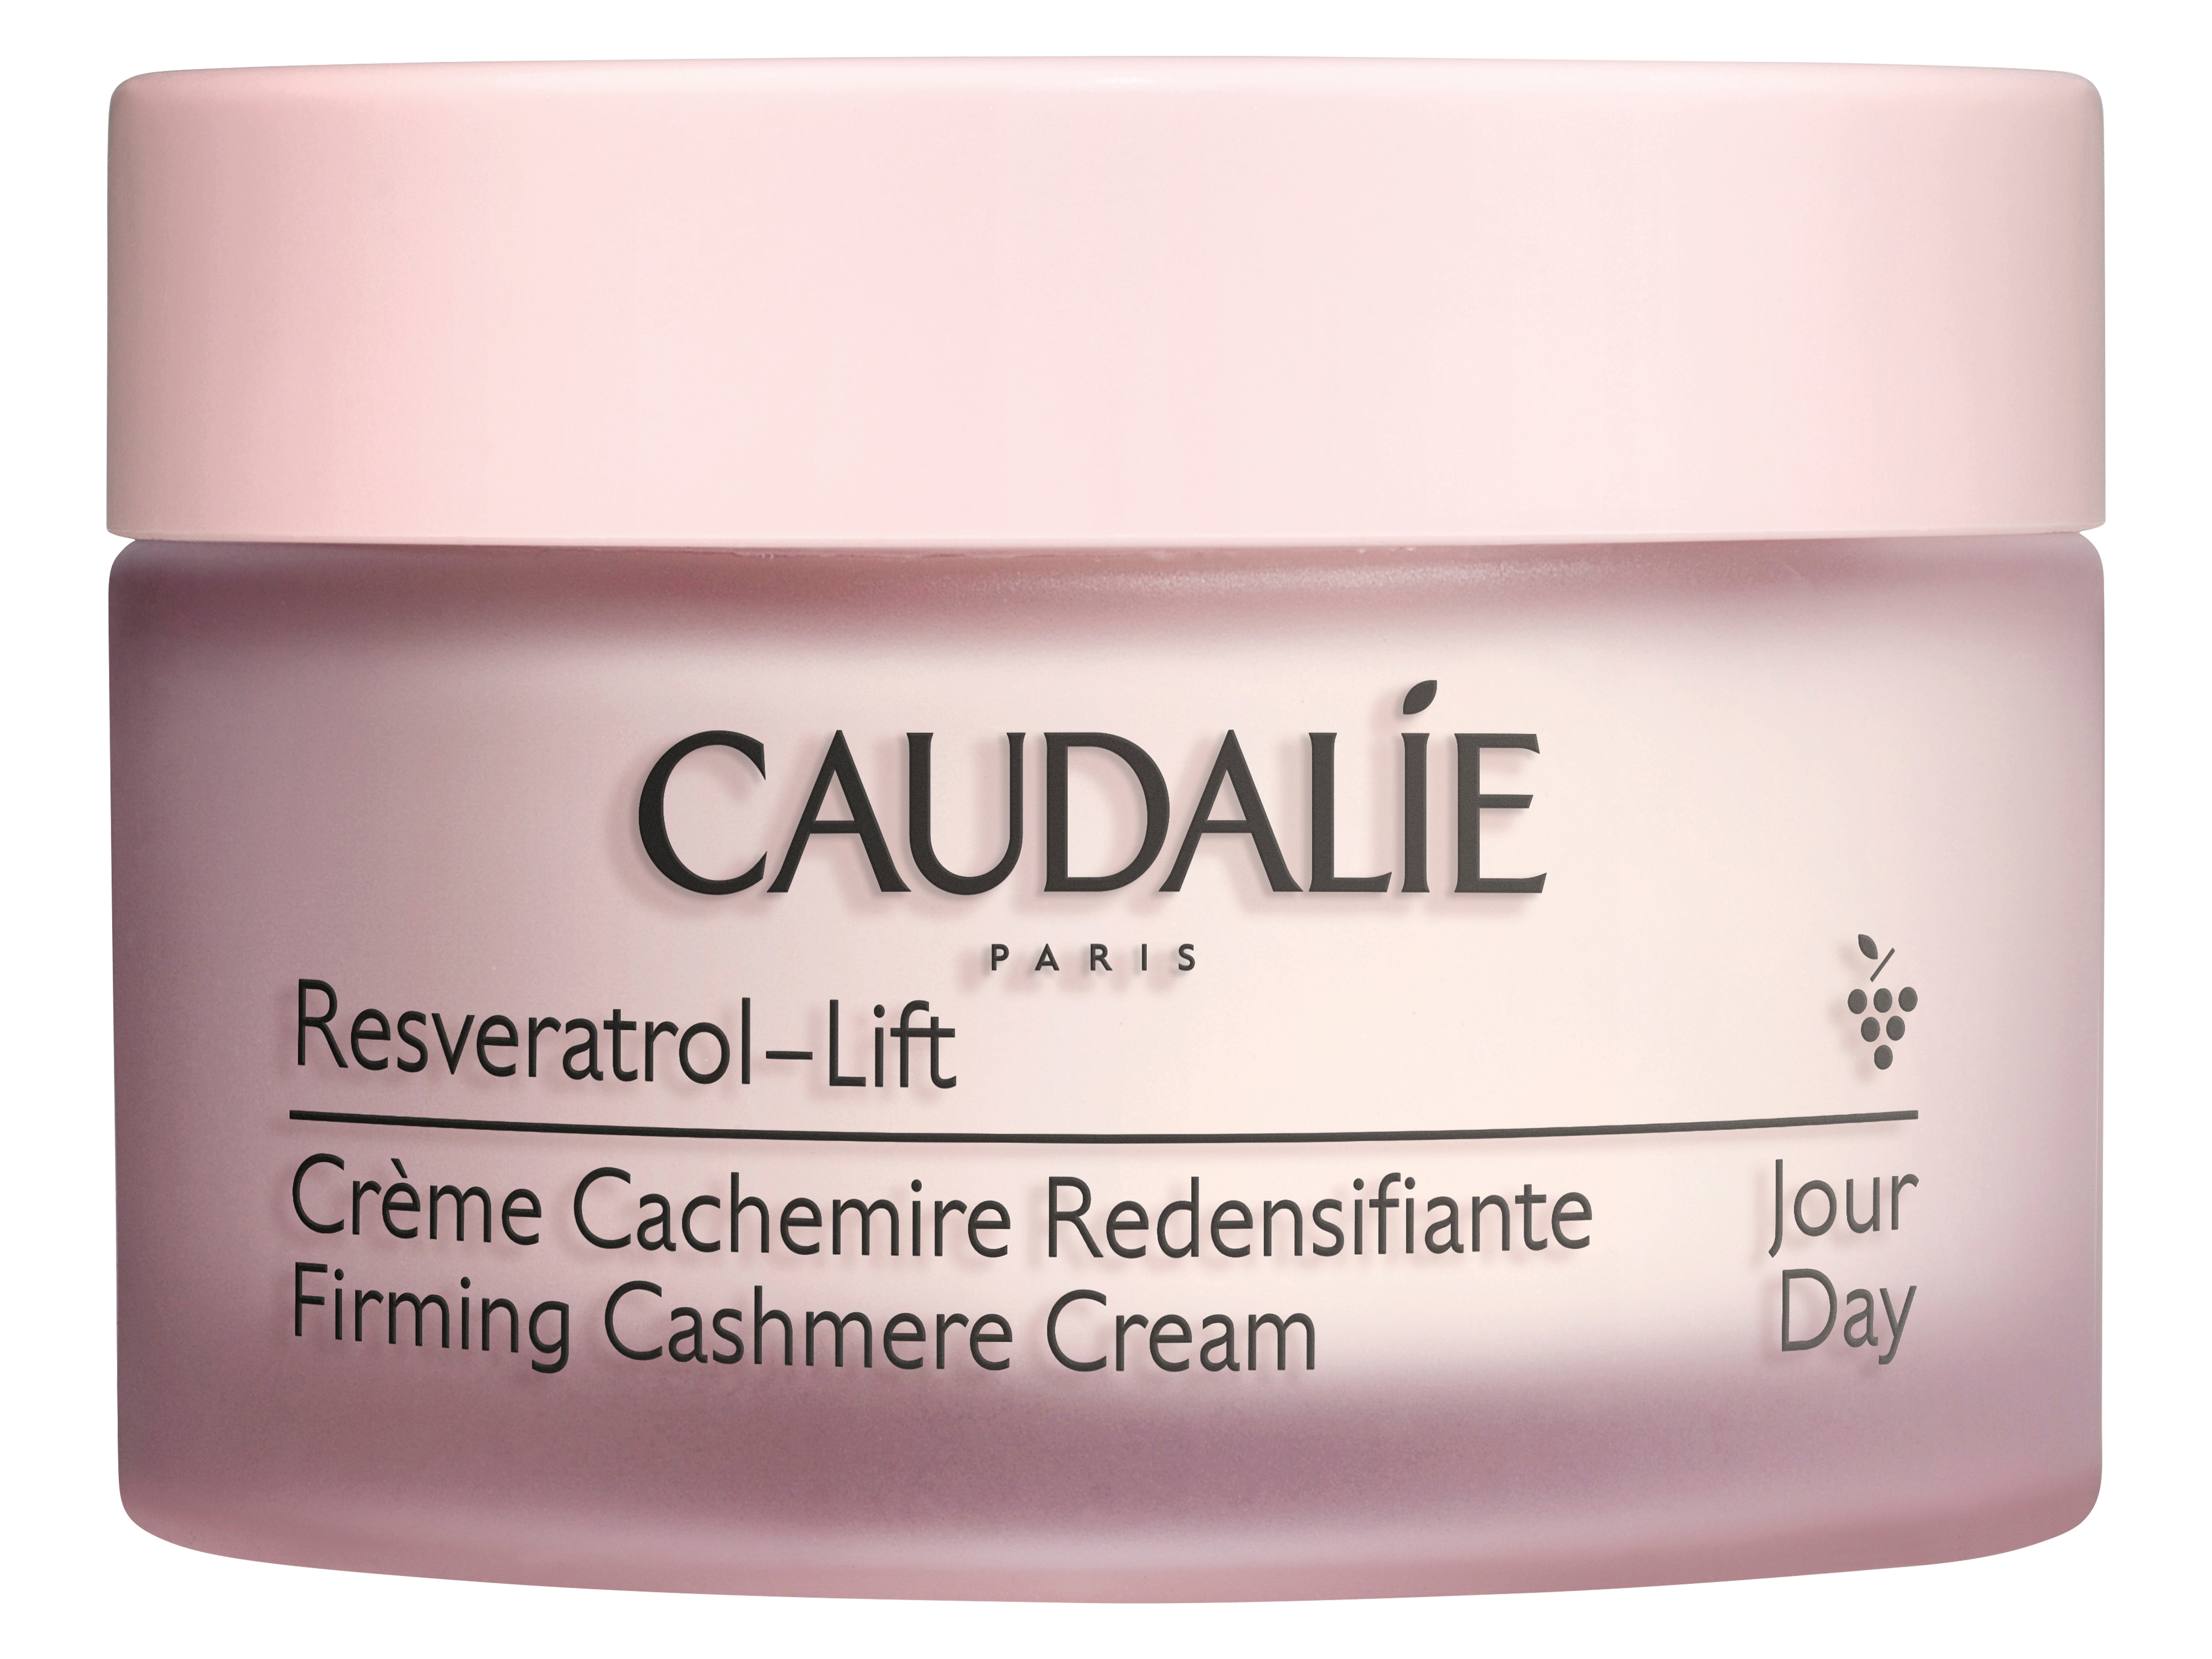 Caudalie Resveratrol-Lift Firming Cashmere Cream, 50 ml